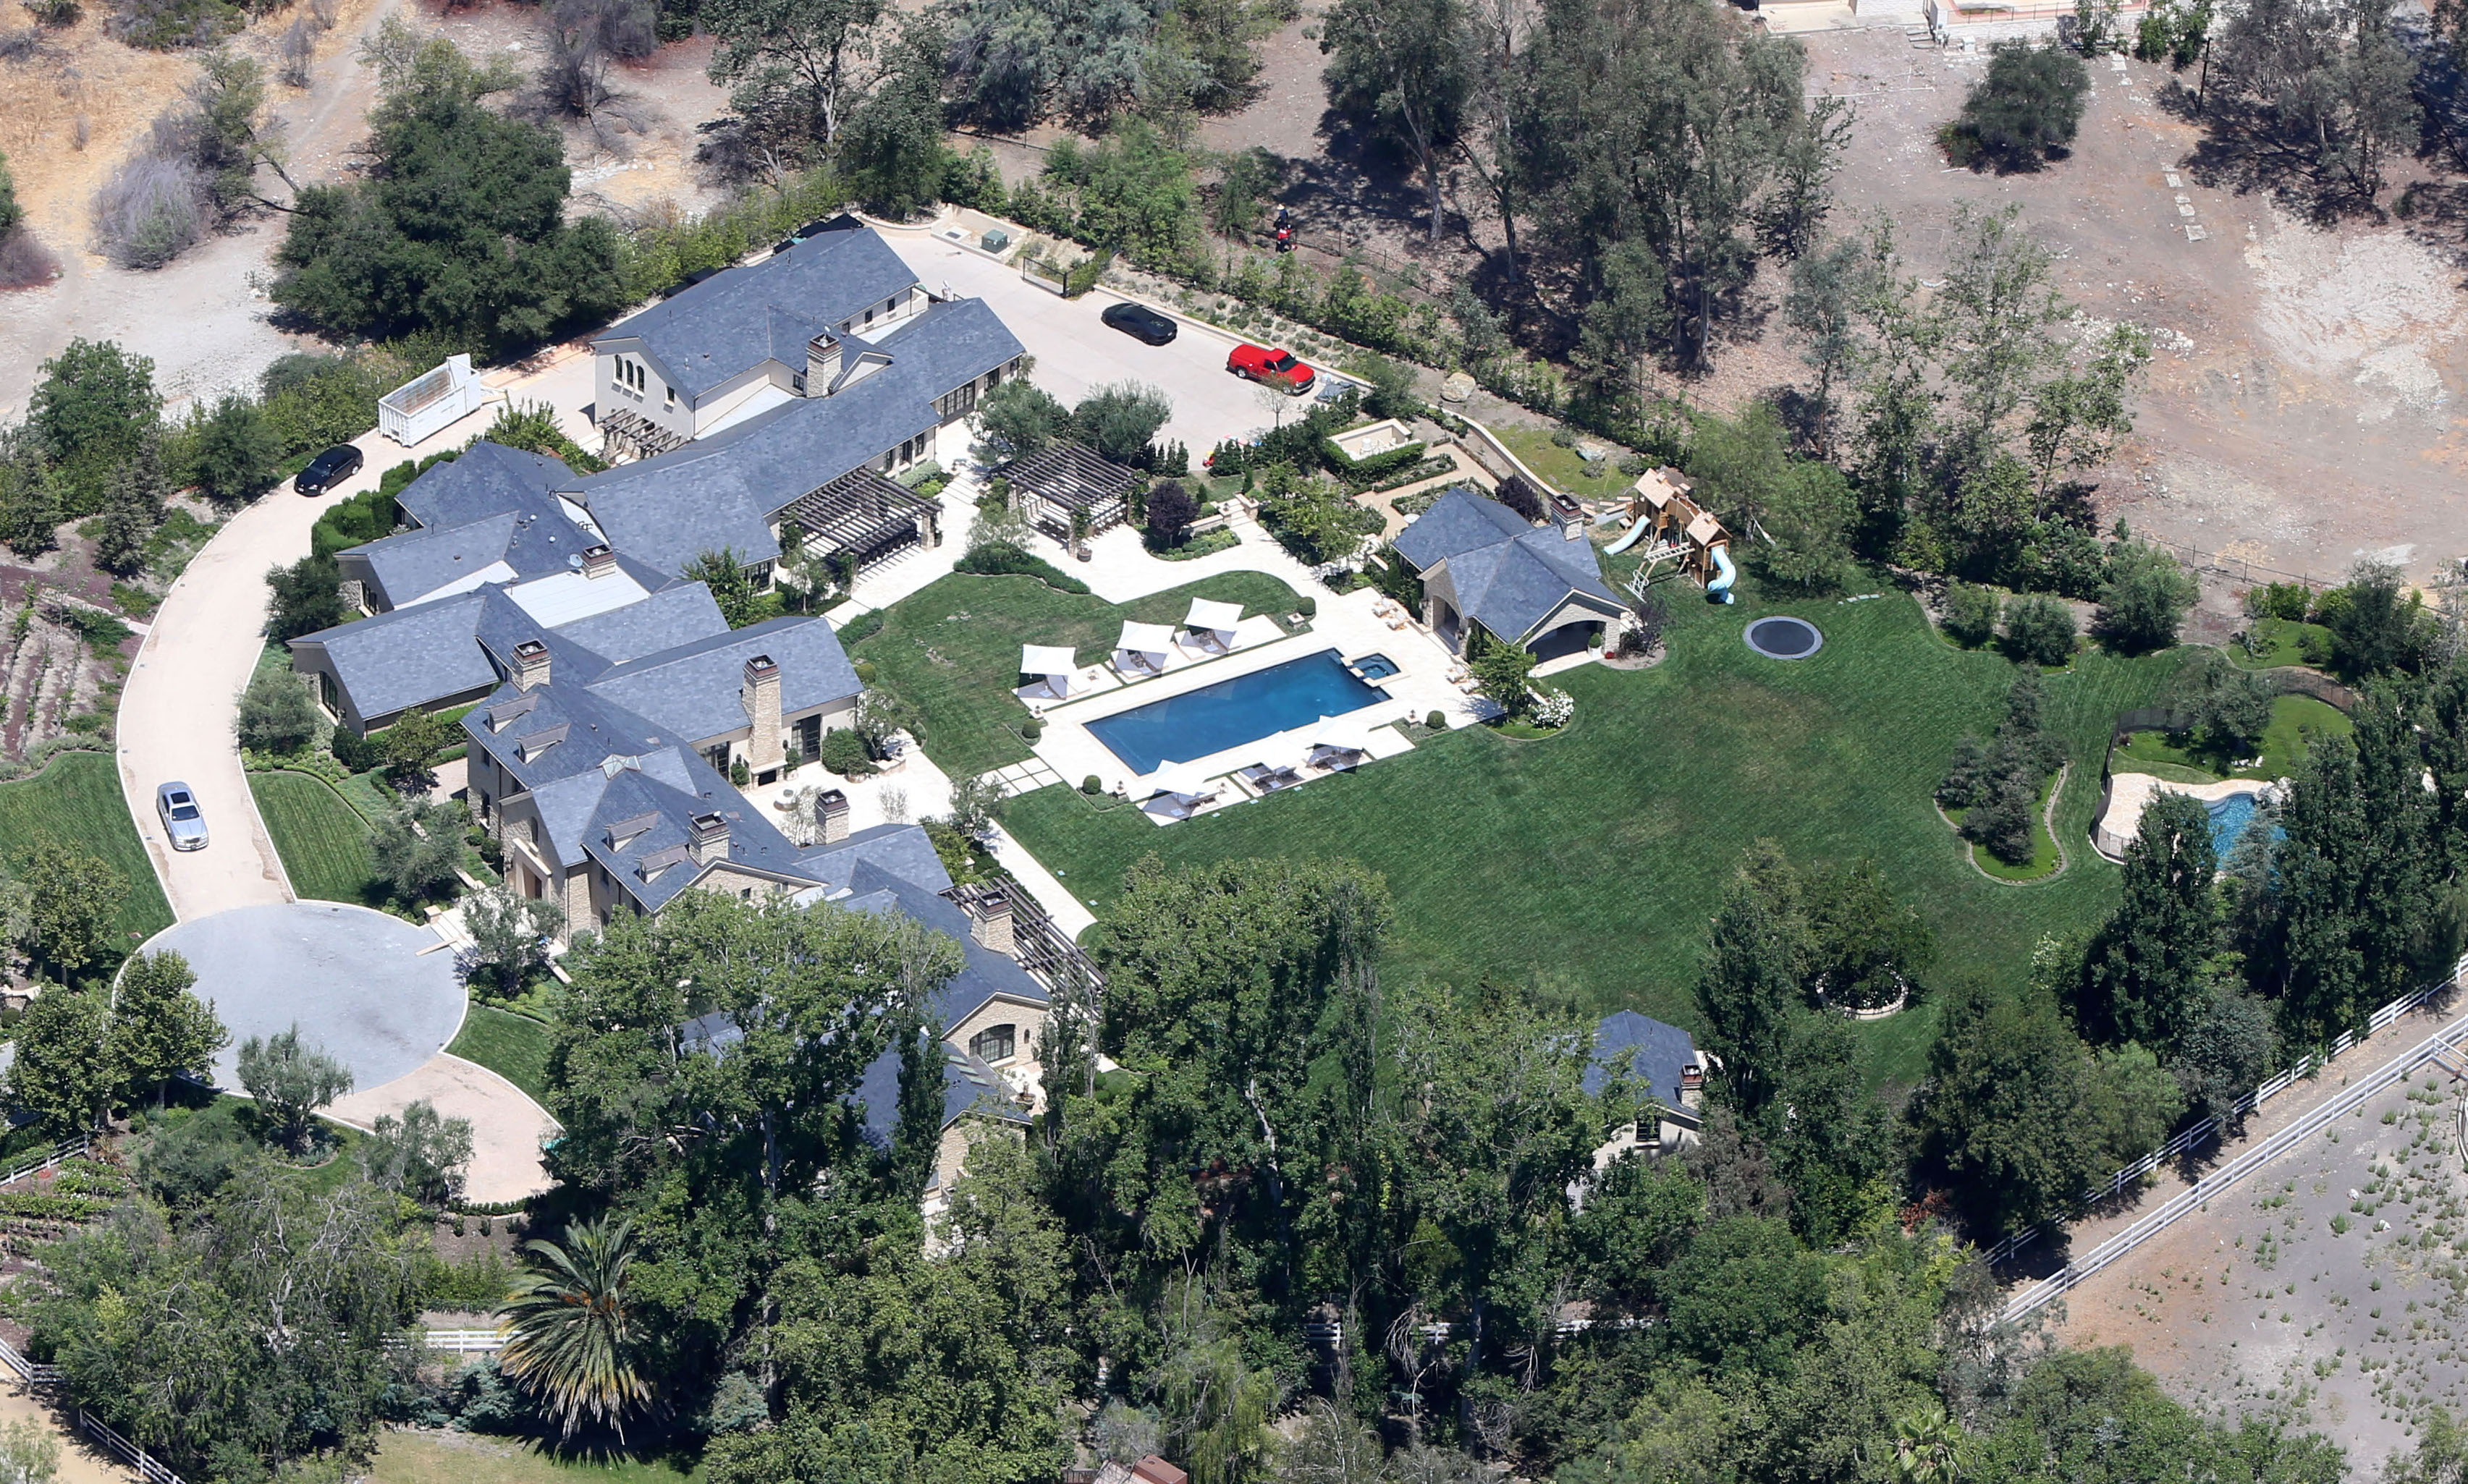 Kim Kardashian and Kanye West's mansion in Hidden Hills, Calif. (Photo credit: Splash)